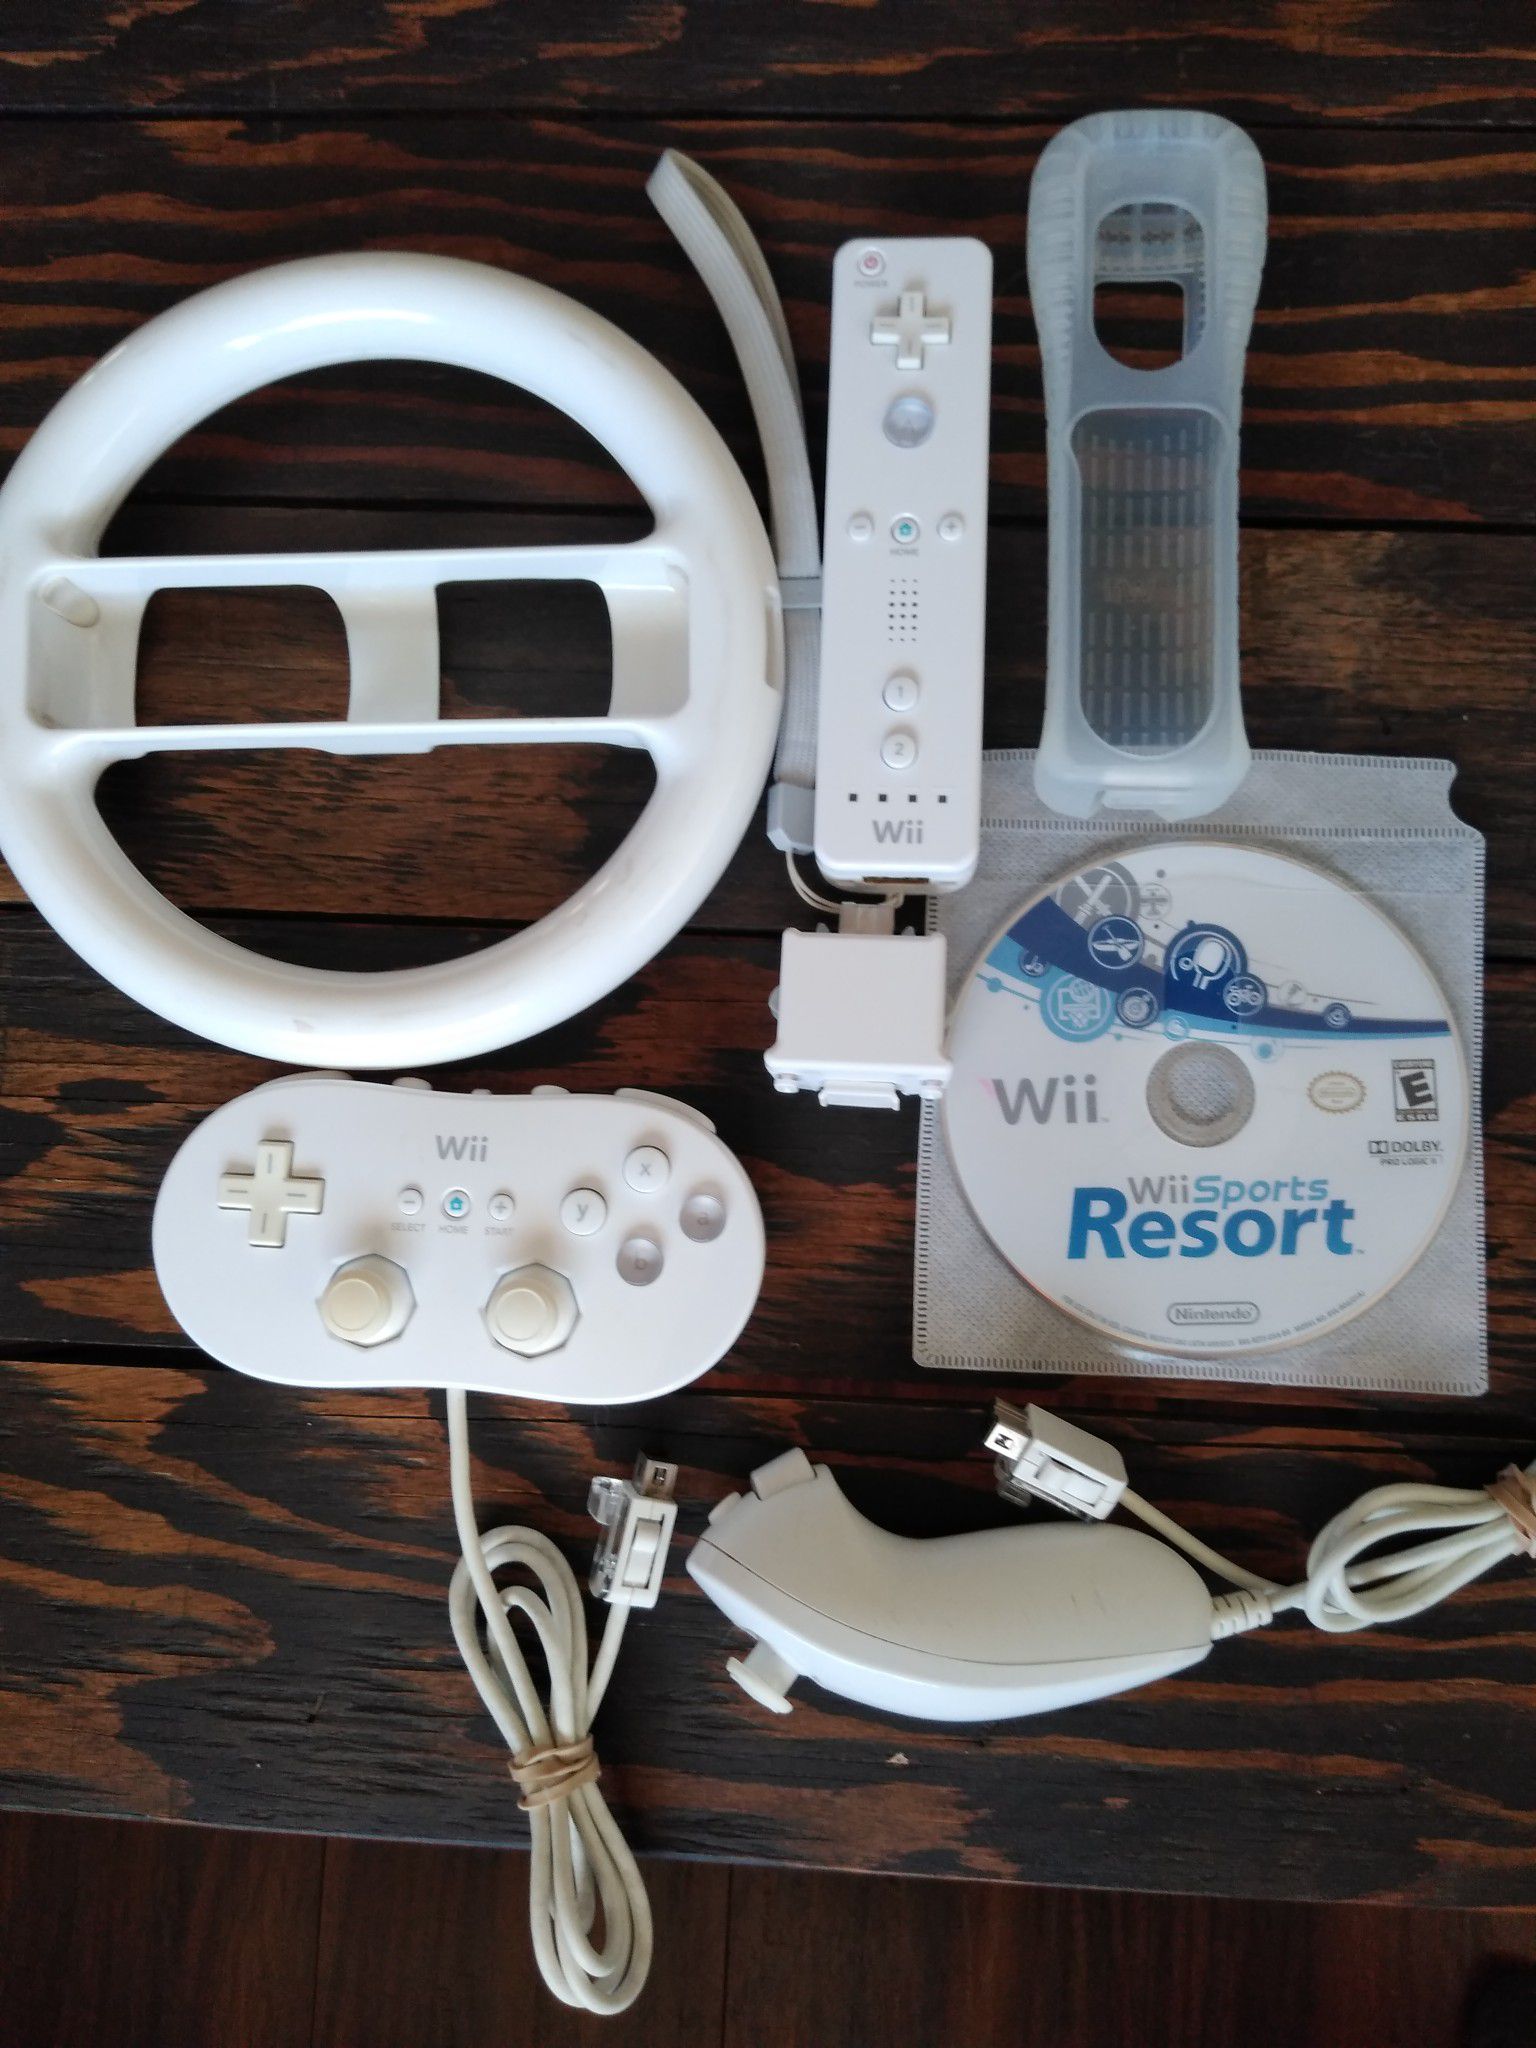 Wii remote game & accessories